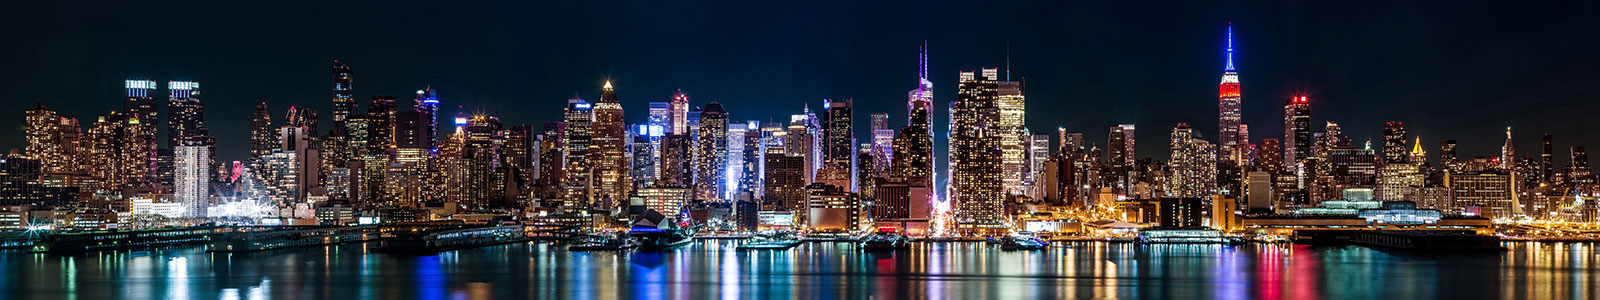 №3135 - Панорама Нью-Йорка глубокой ночью